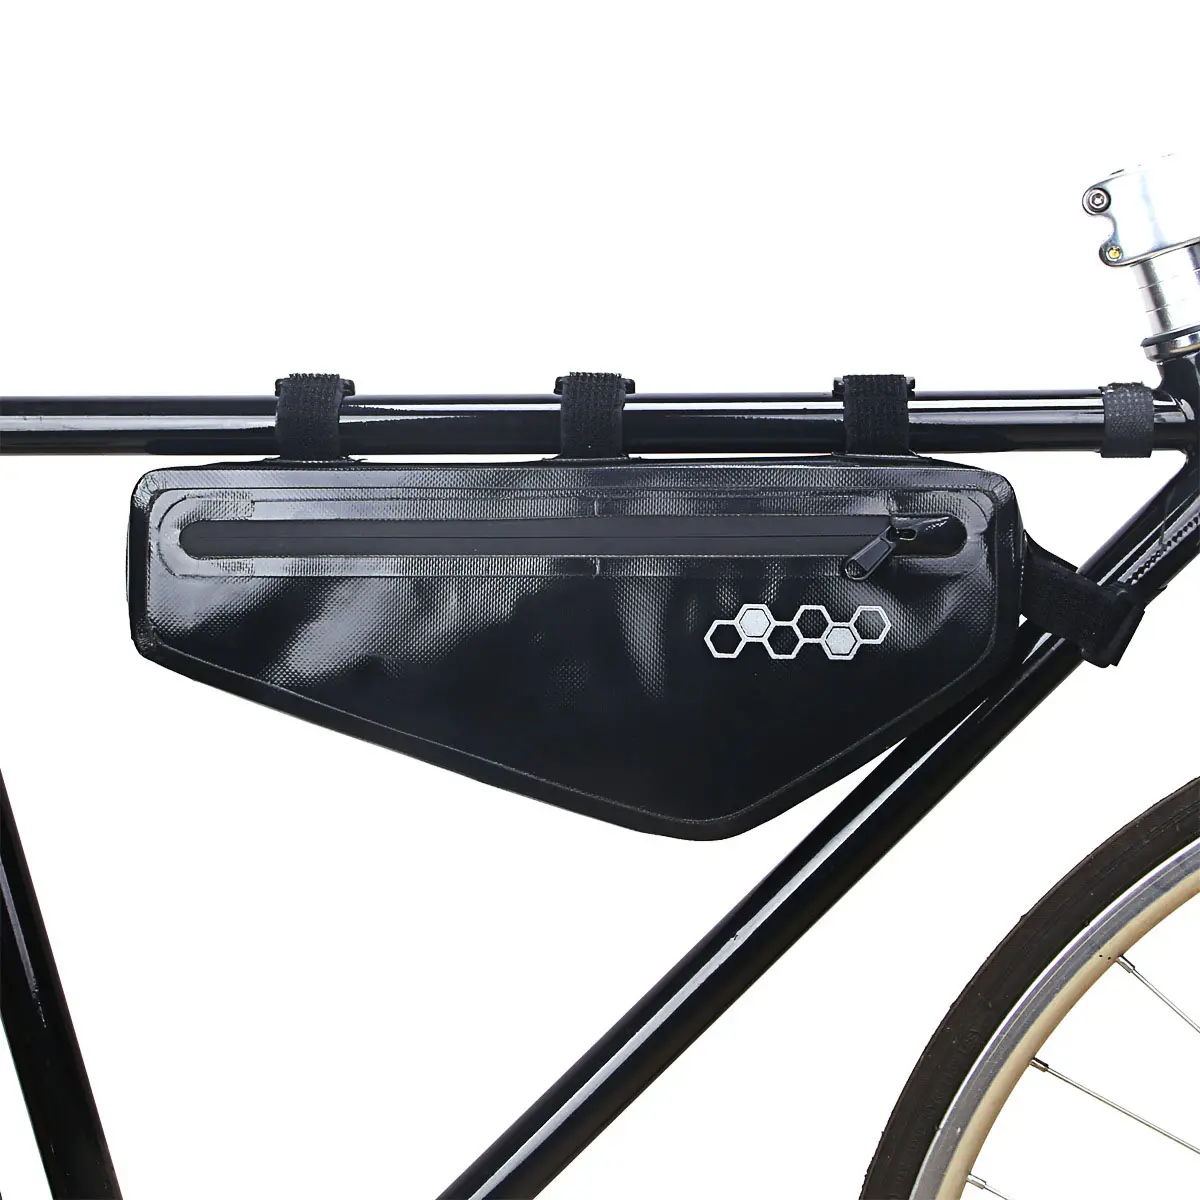 Waterproof bicycle triangle bag upper tube bag front beam bag large capacity mountain bike riding equipment